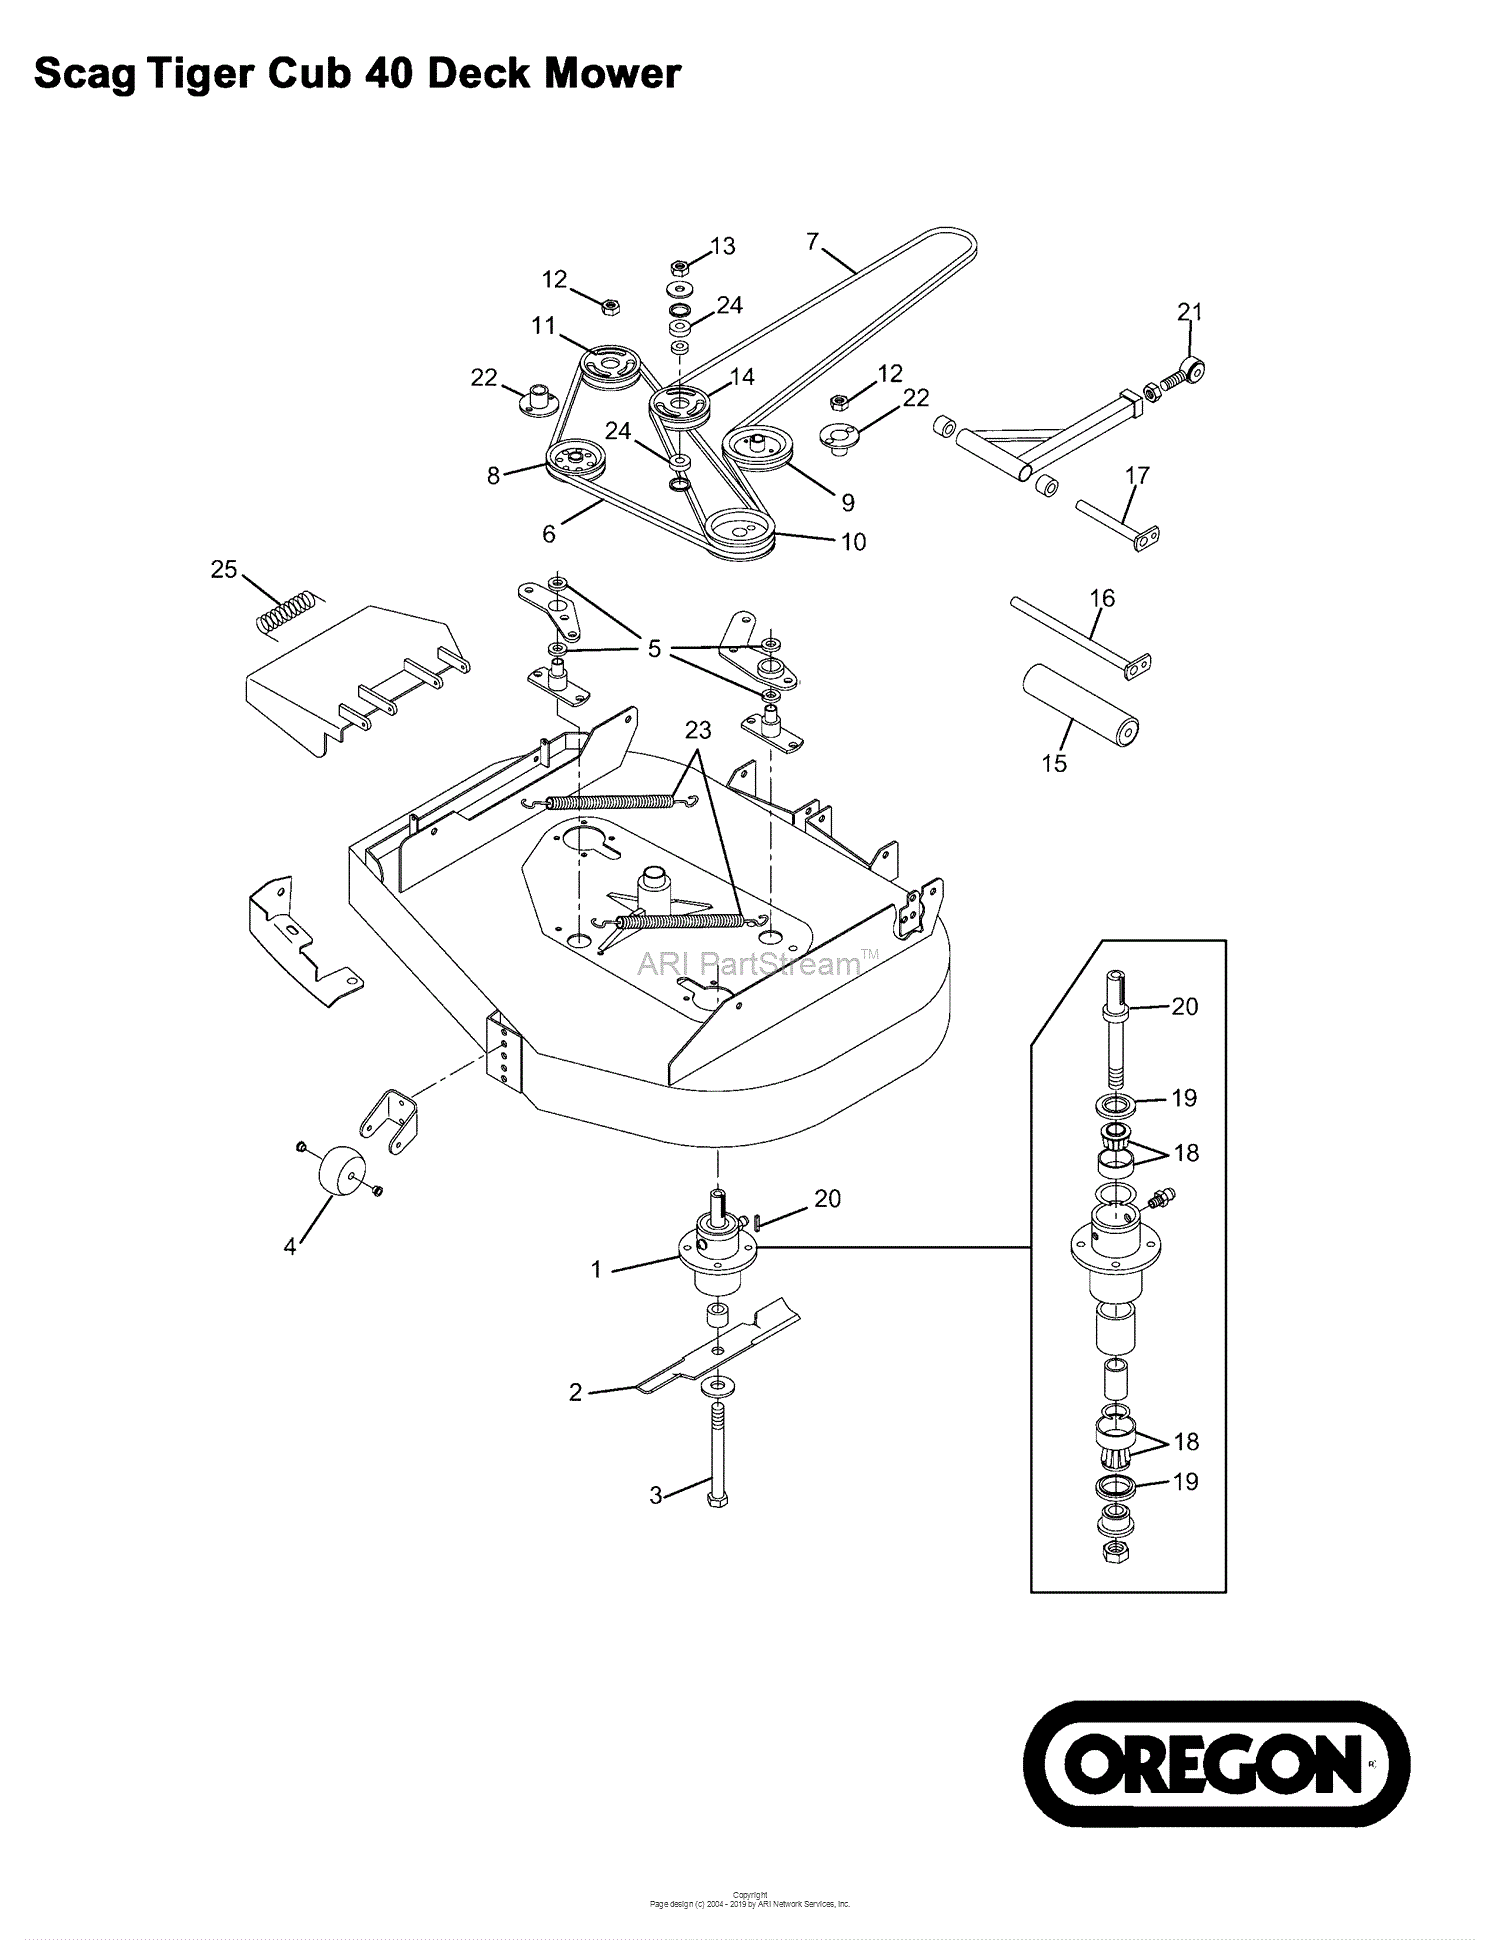 Oregon Scag  Parts Diagram  for Scag  Tiger  Cub 40 Deck Mower